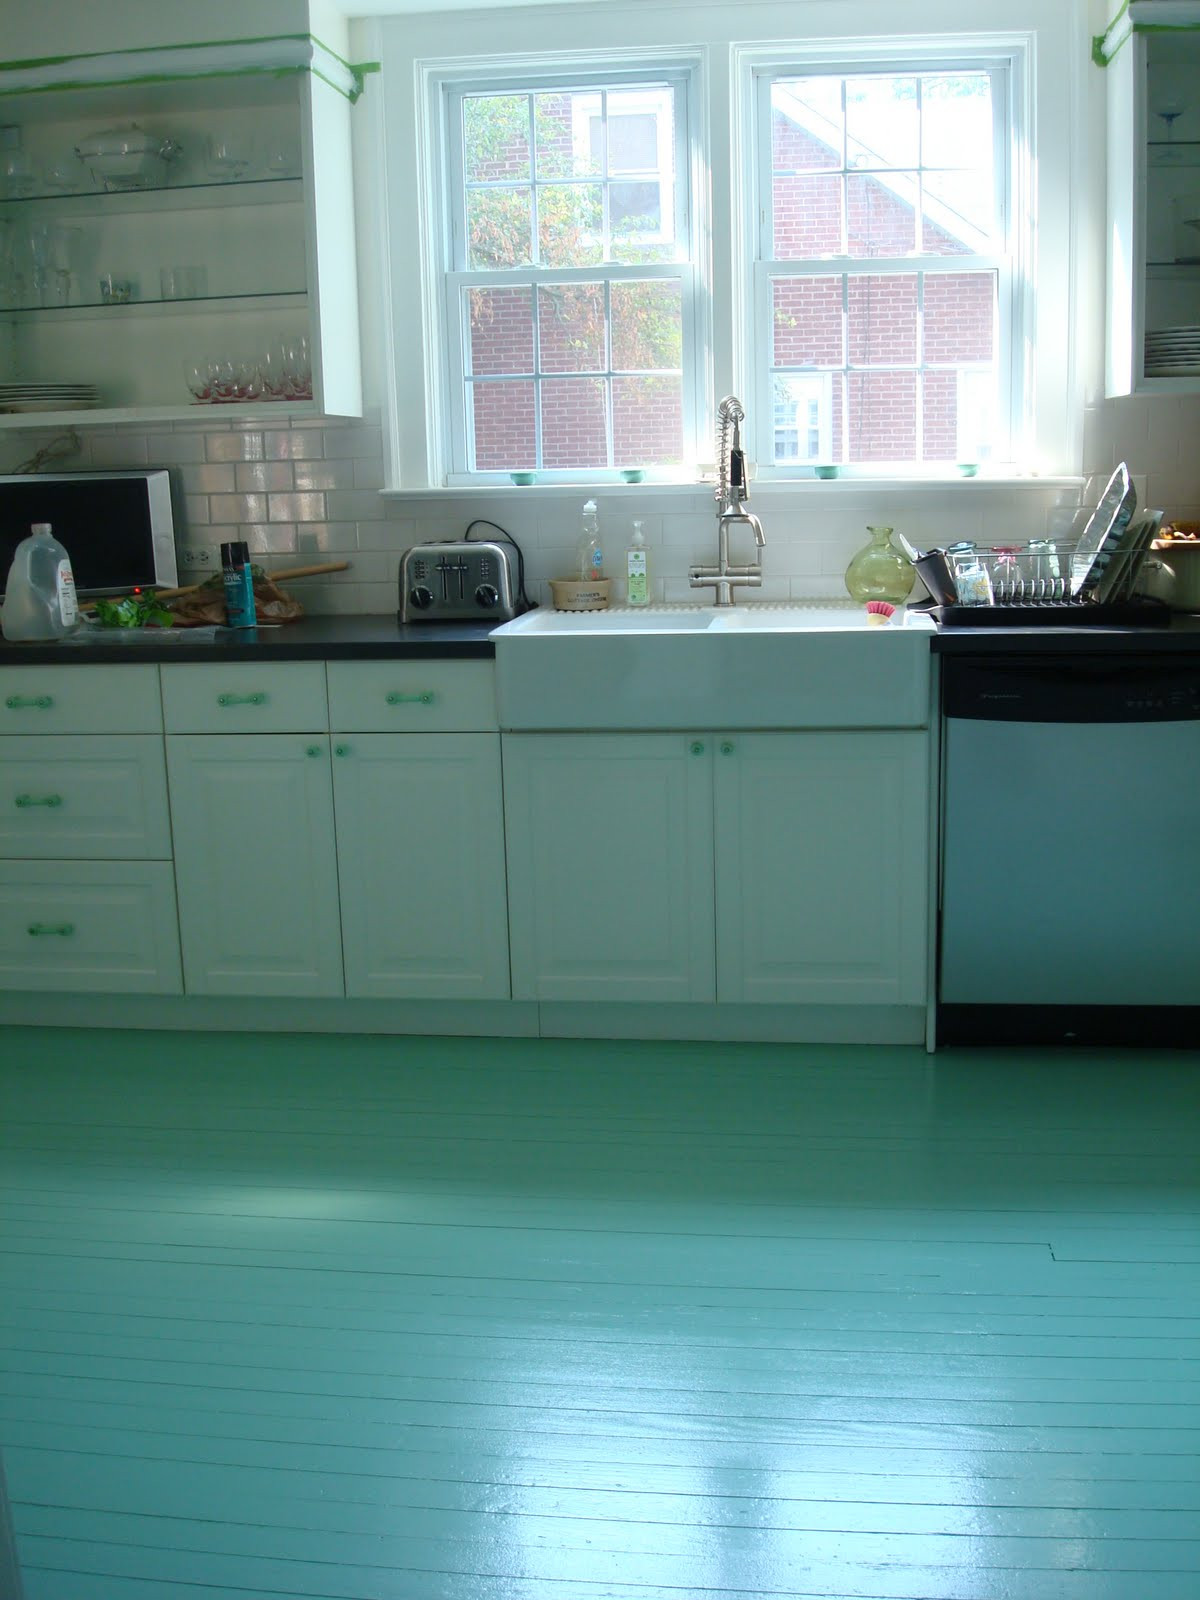 Best ideas about DIY Kitchen Floor
. Save or Pin High Heeled Foot in the Door DIY Painted Kitchen Floor Now.